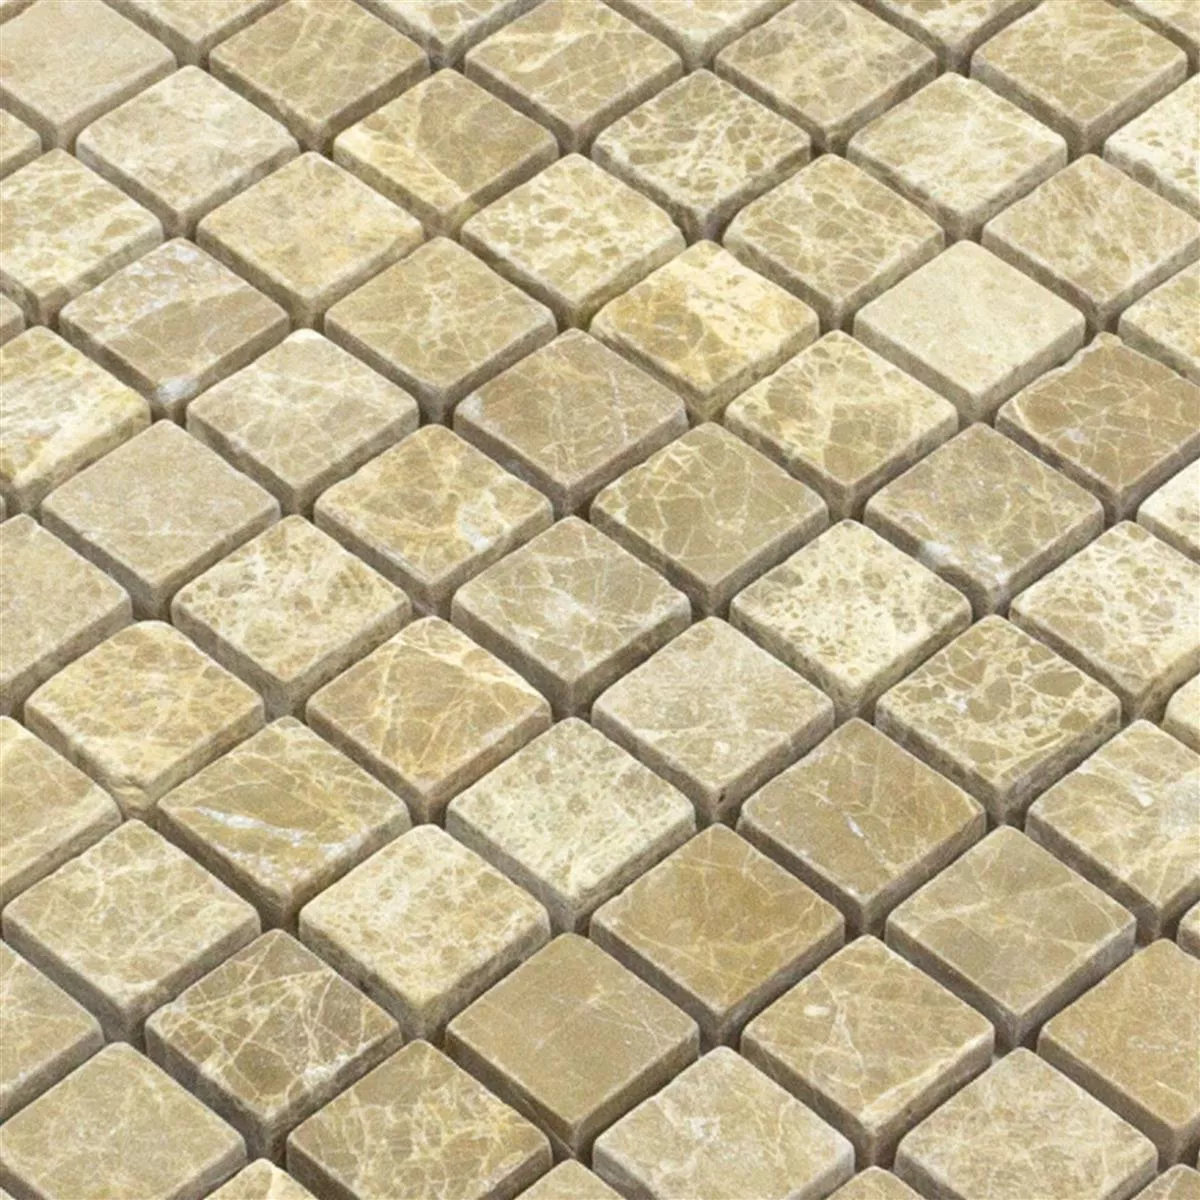 Mramor Mozaik Od Prirodnog Kamena Pločice Menia Bež